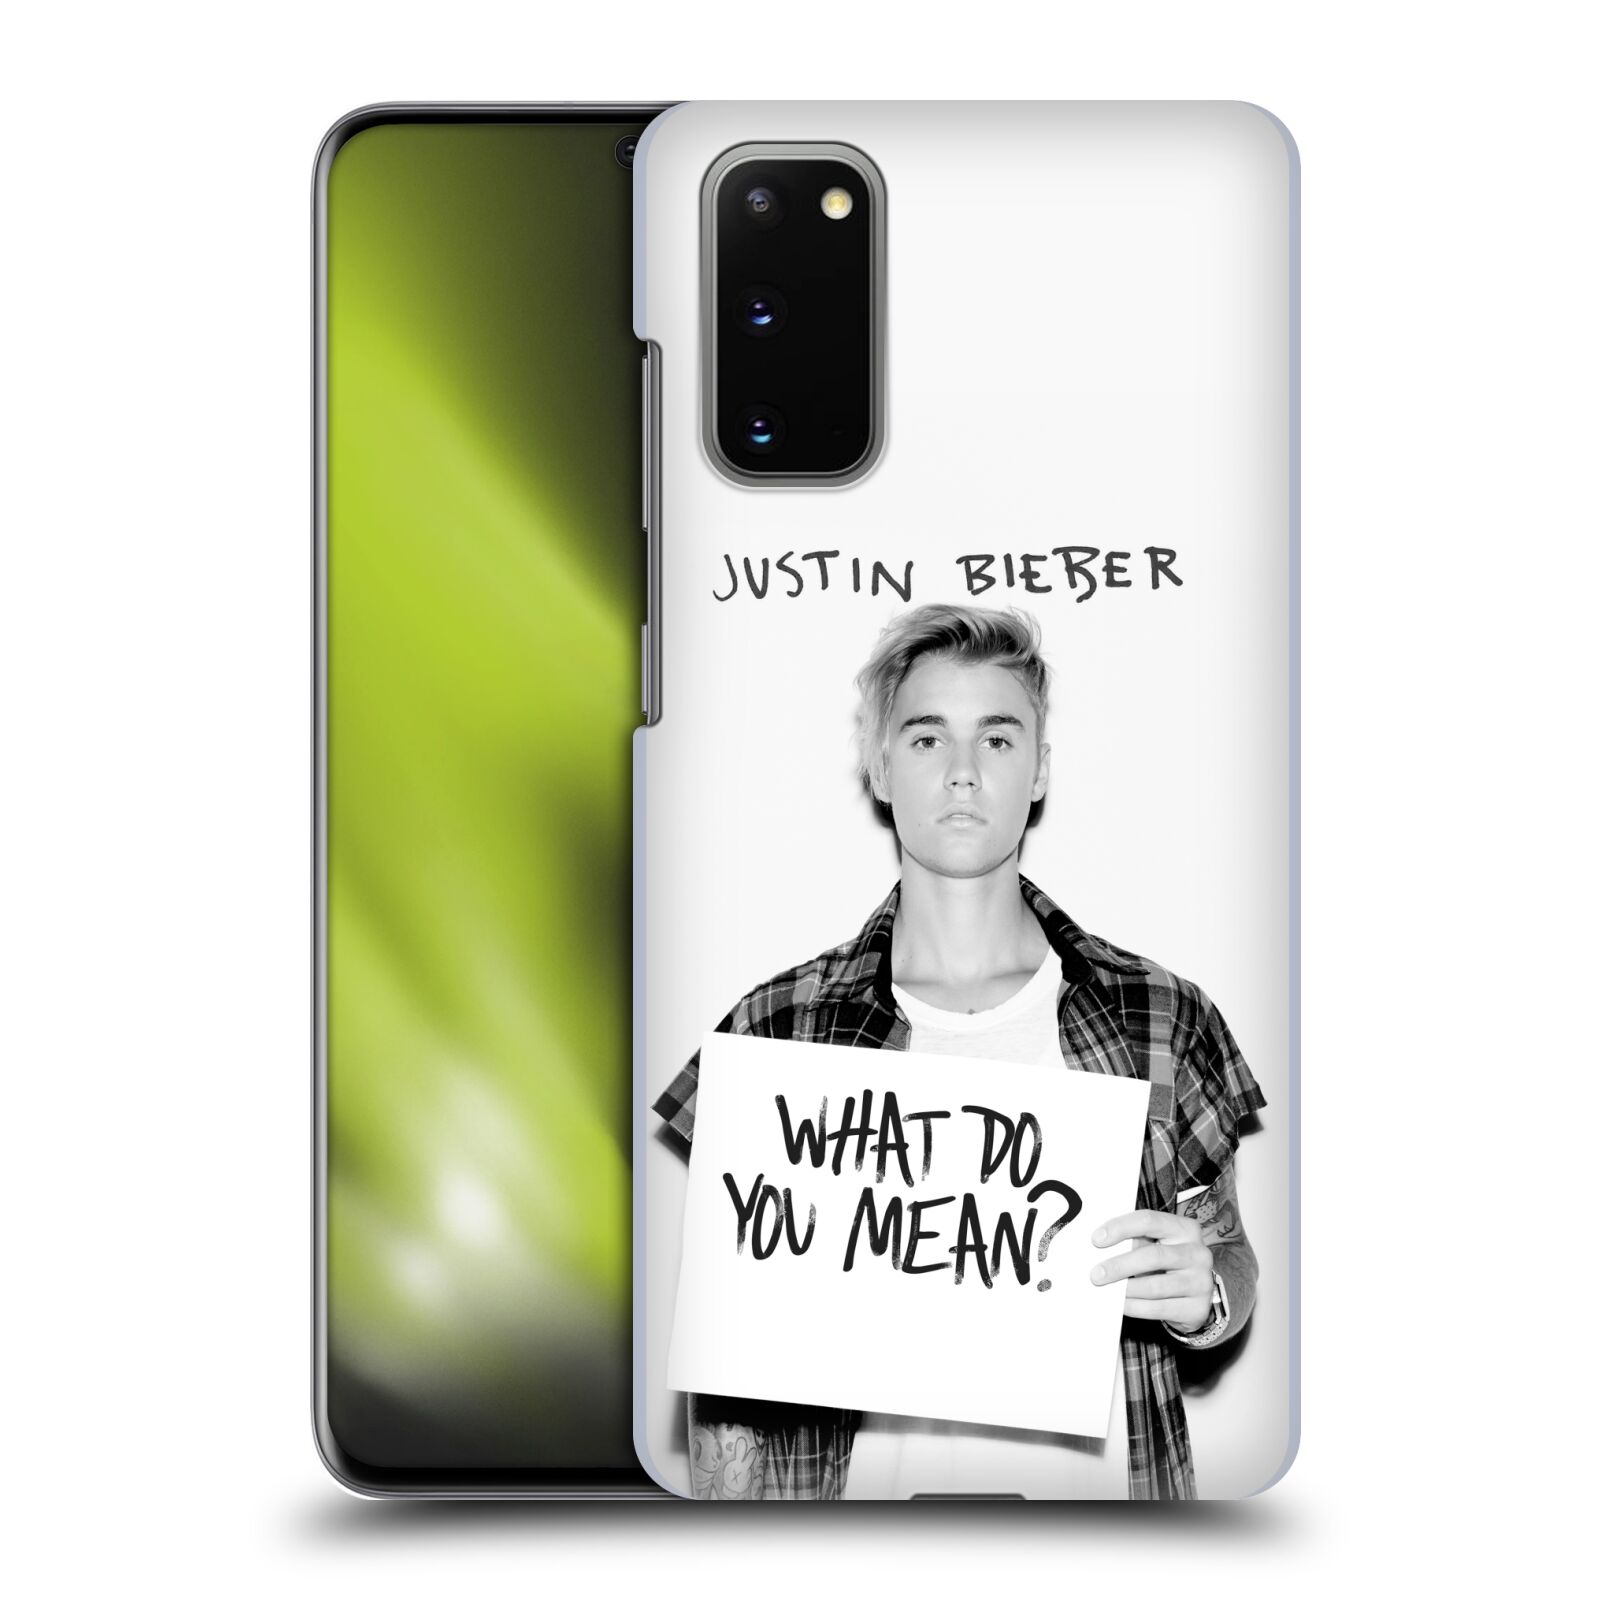 Pouzdro na mobil Samsung Galaxy S20 - HEAD CASE - Justin Bieber foto Purpose What do you mean